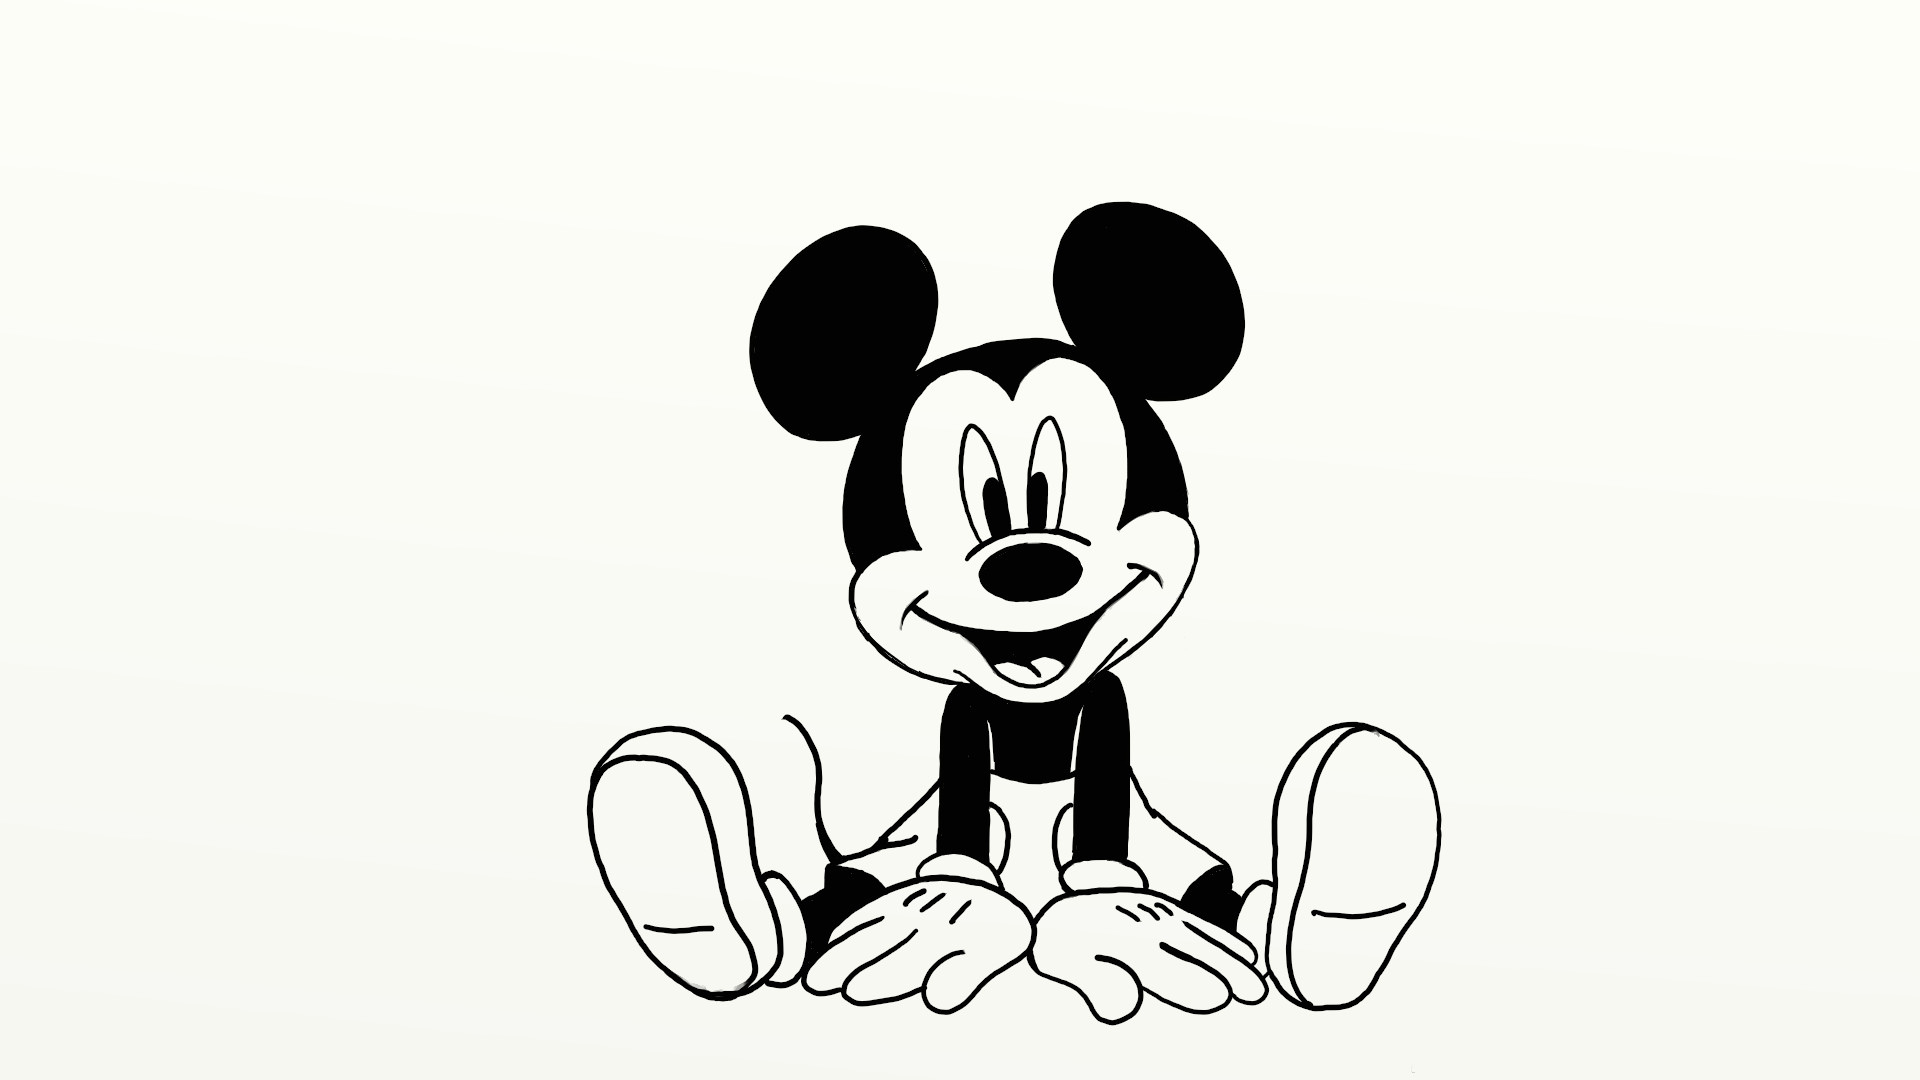 Daisy Duck, Goofy, Pluto, The Walt Disney Company, Donald Duck, Minnie Mouse,  Mickey Mouse, cartoons, illustration, drawing | Anyrgb